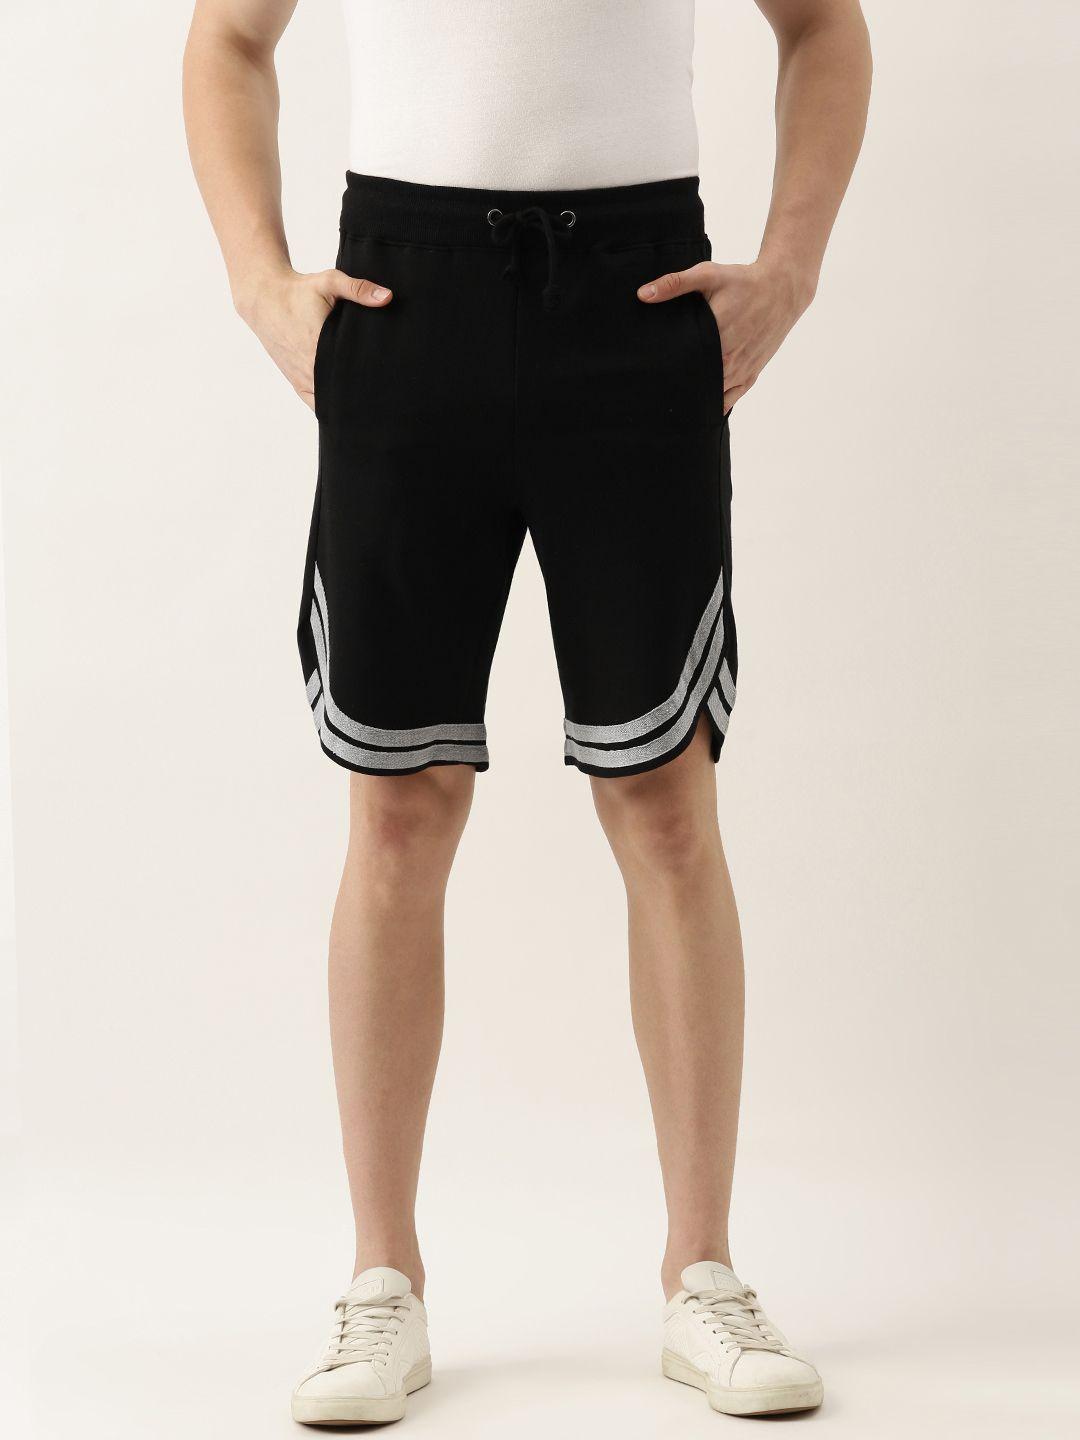 arise men black solid shorts